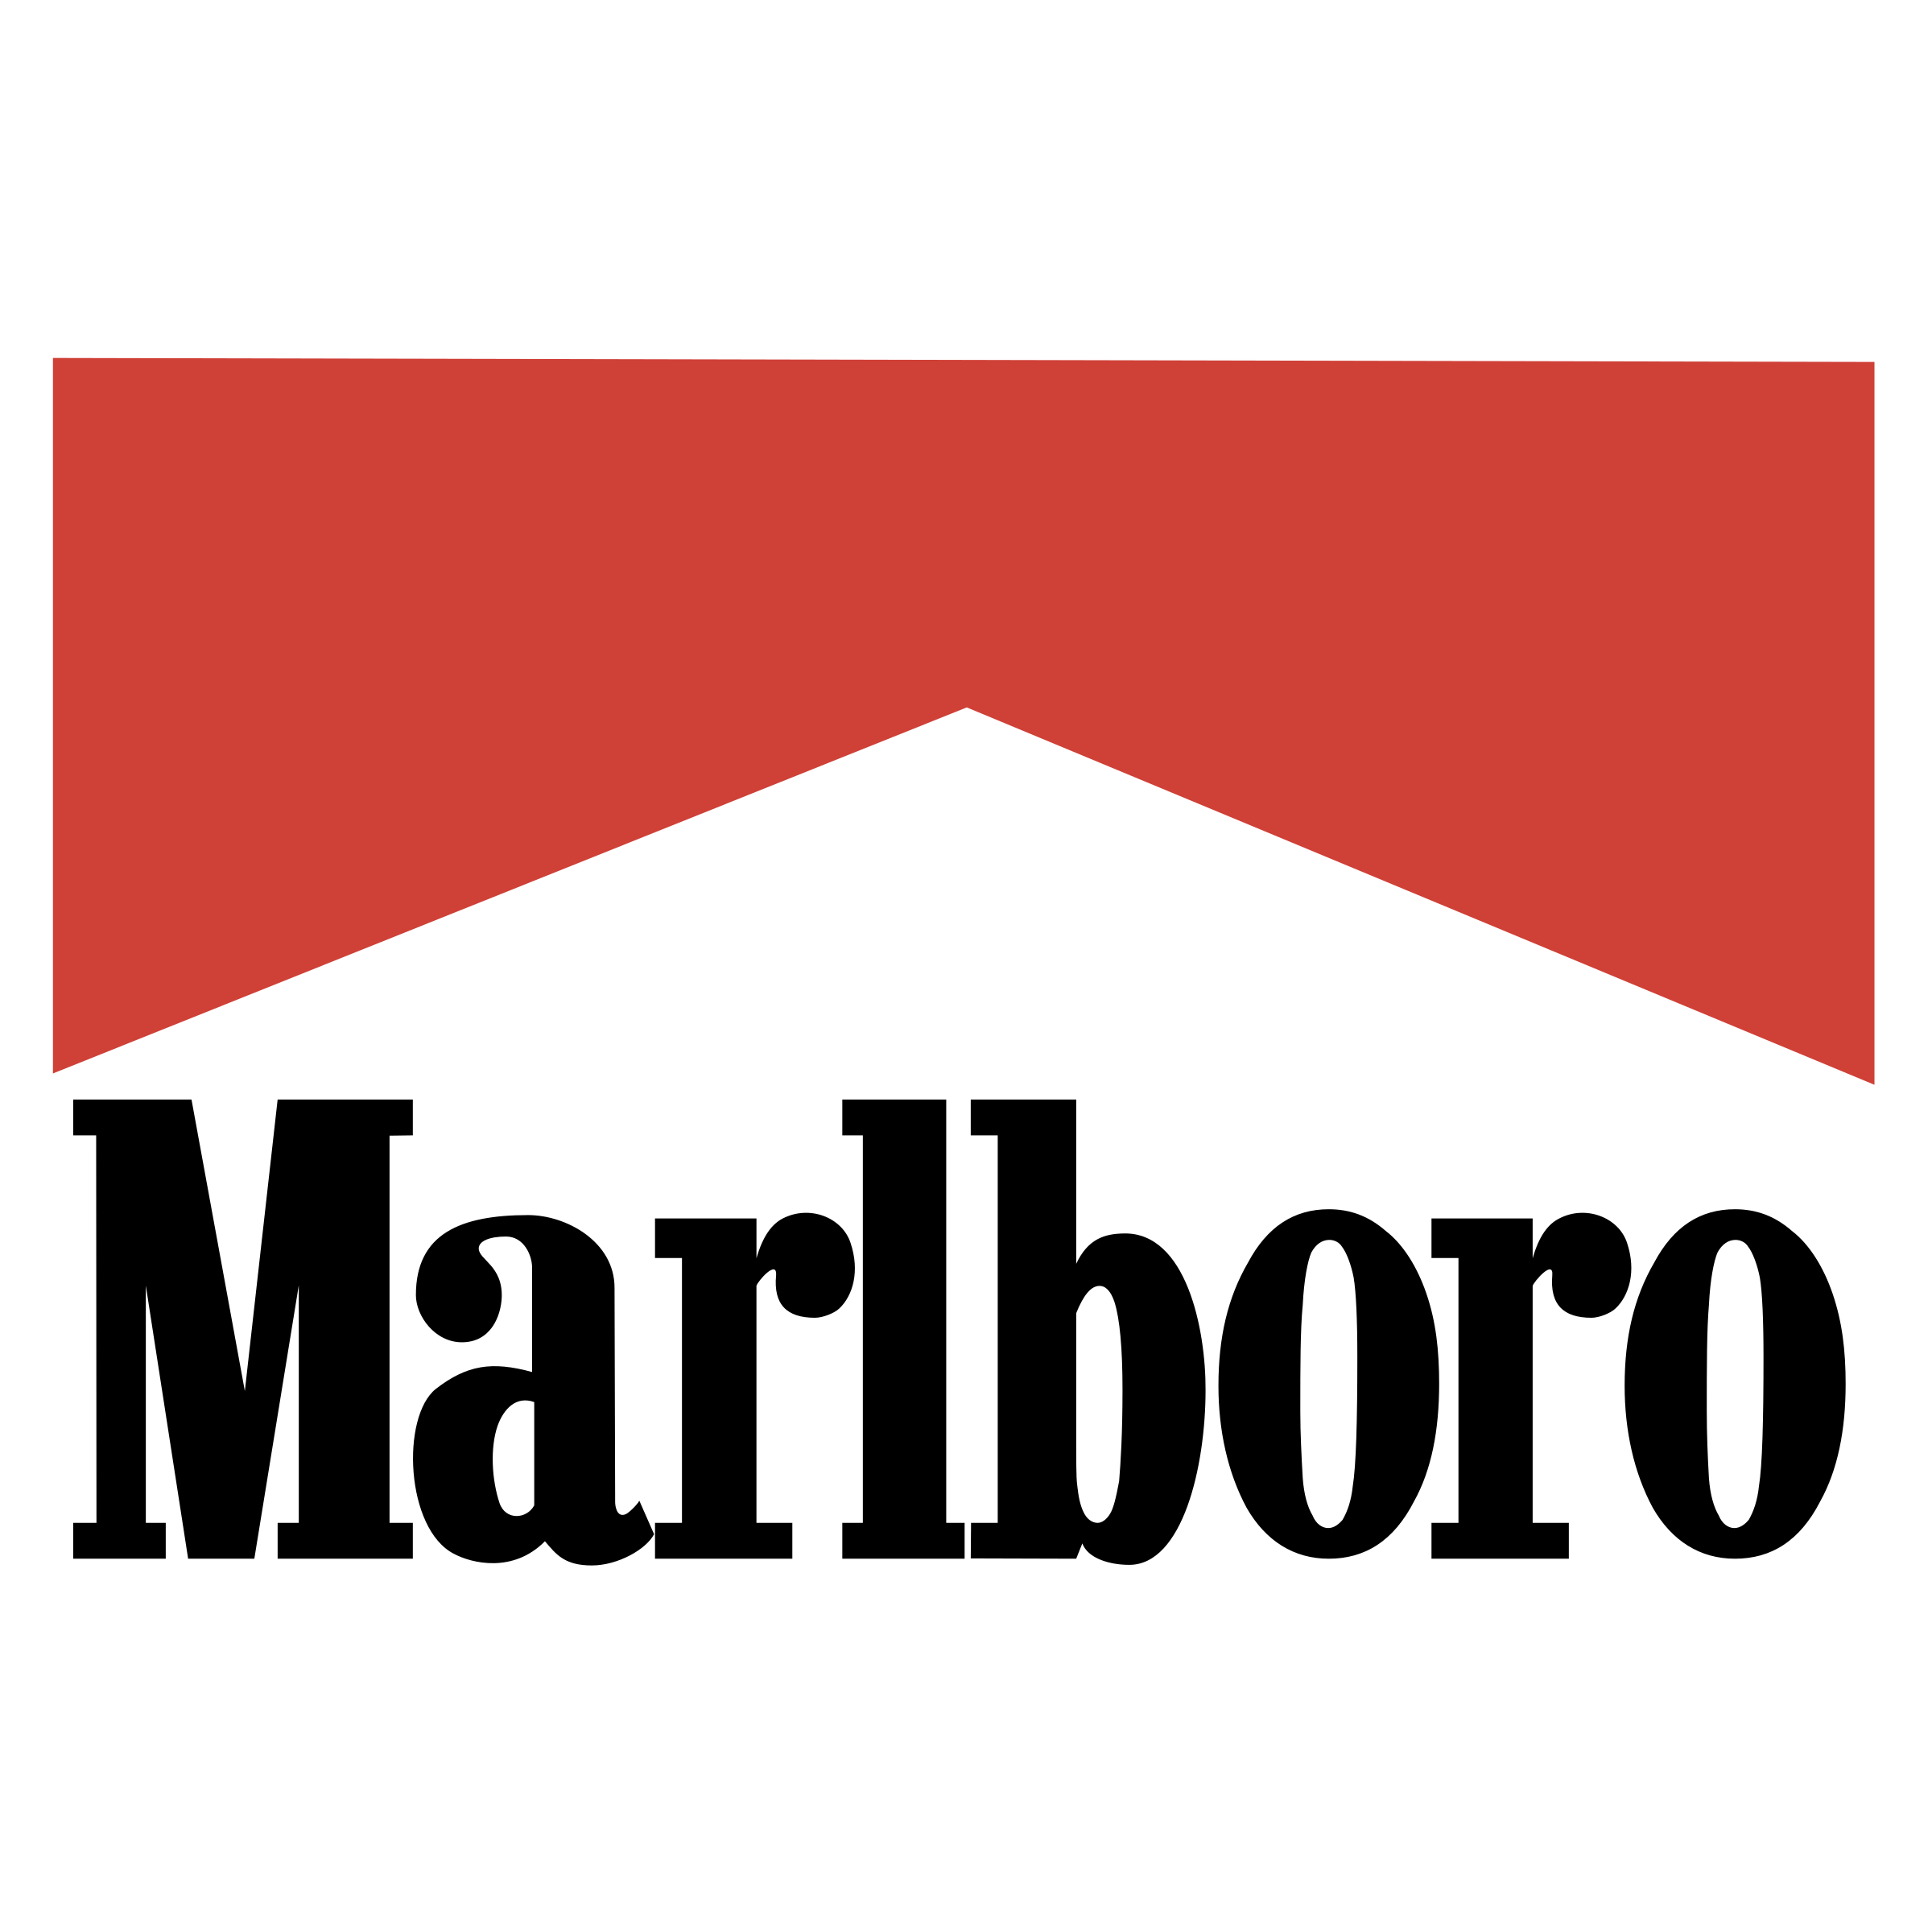 Maarlboro Logo - Marlboro Logo PNG Transparent & SVG Vector - Freebie Supply